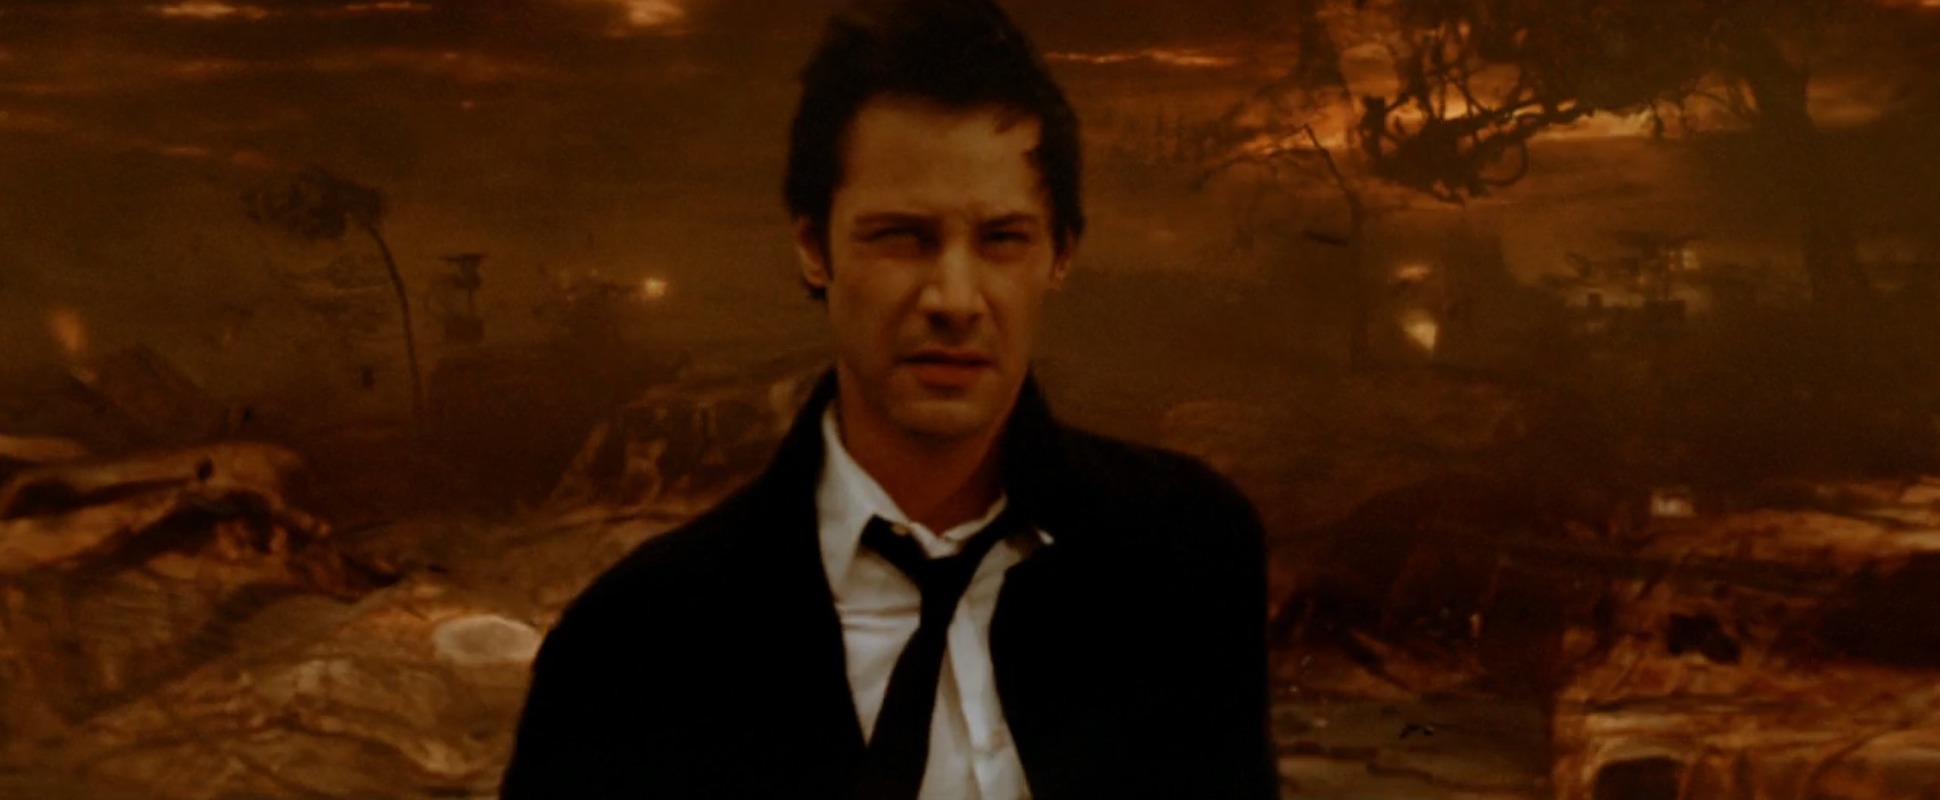 Keanu Reeves como John Constantine (2005), Warner Bros. Pictures